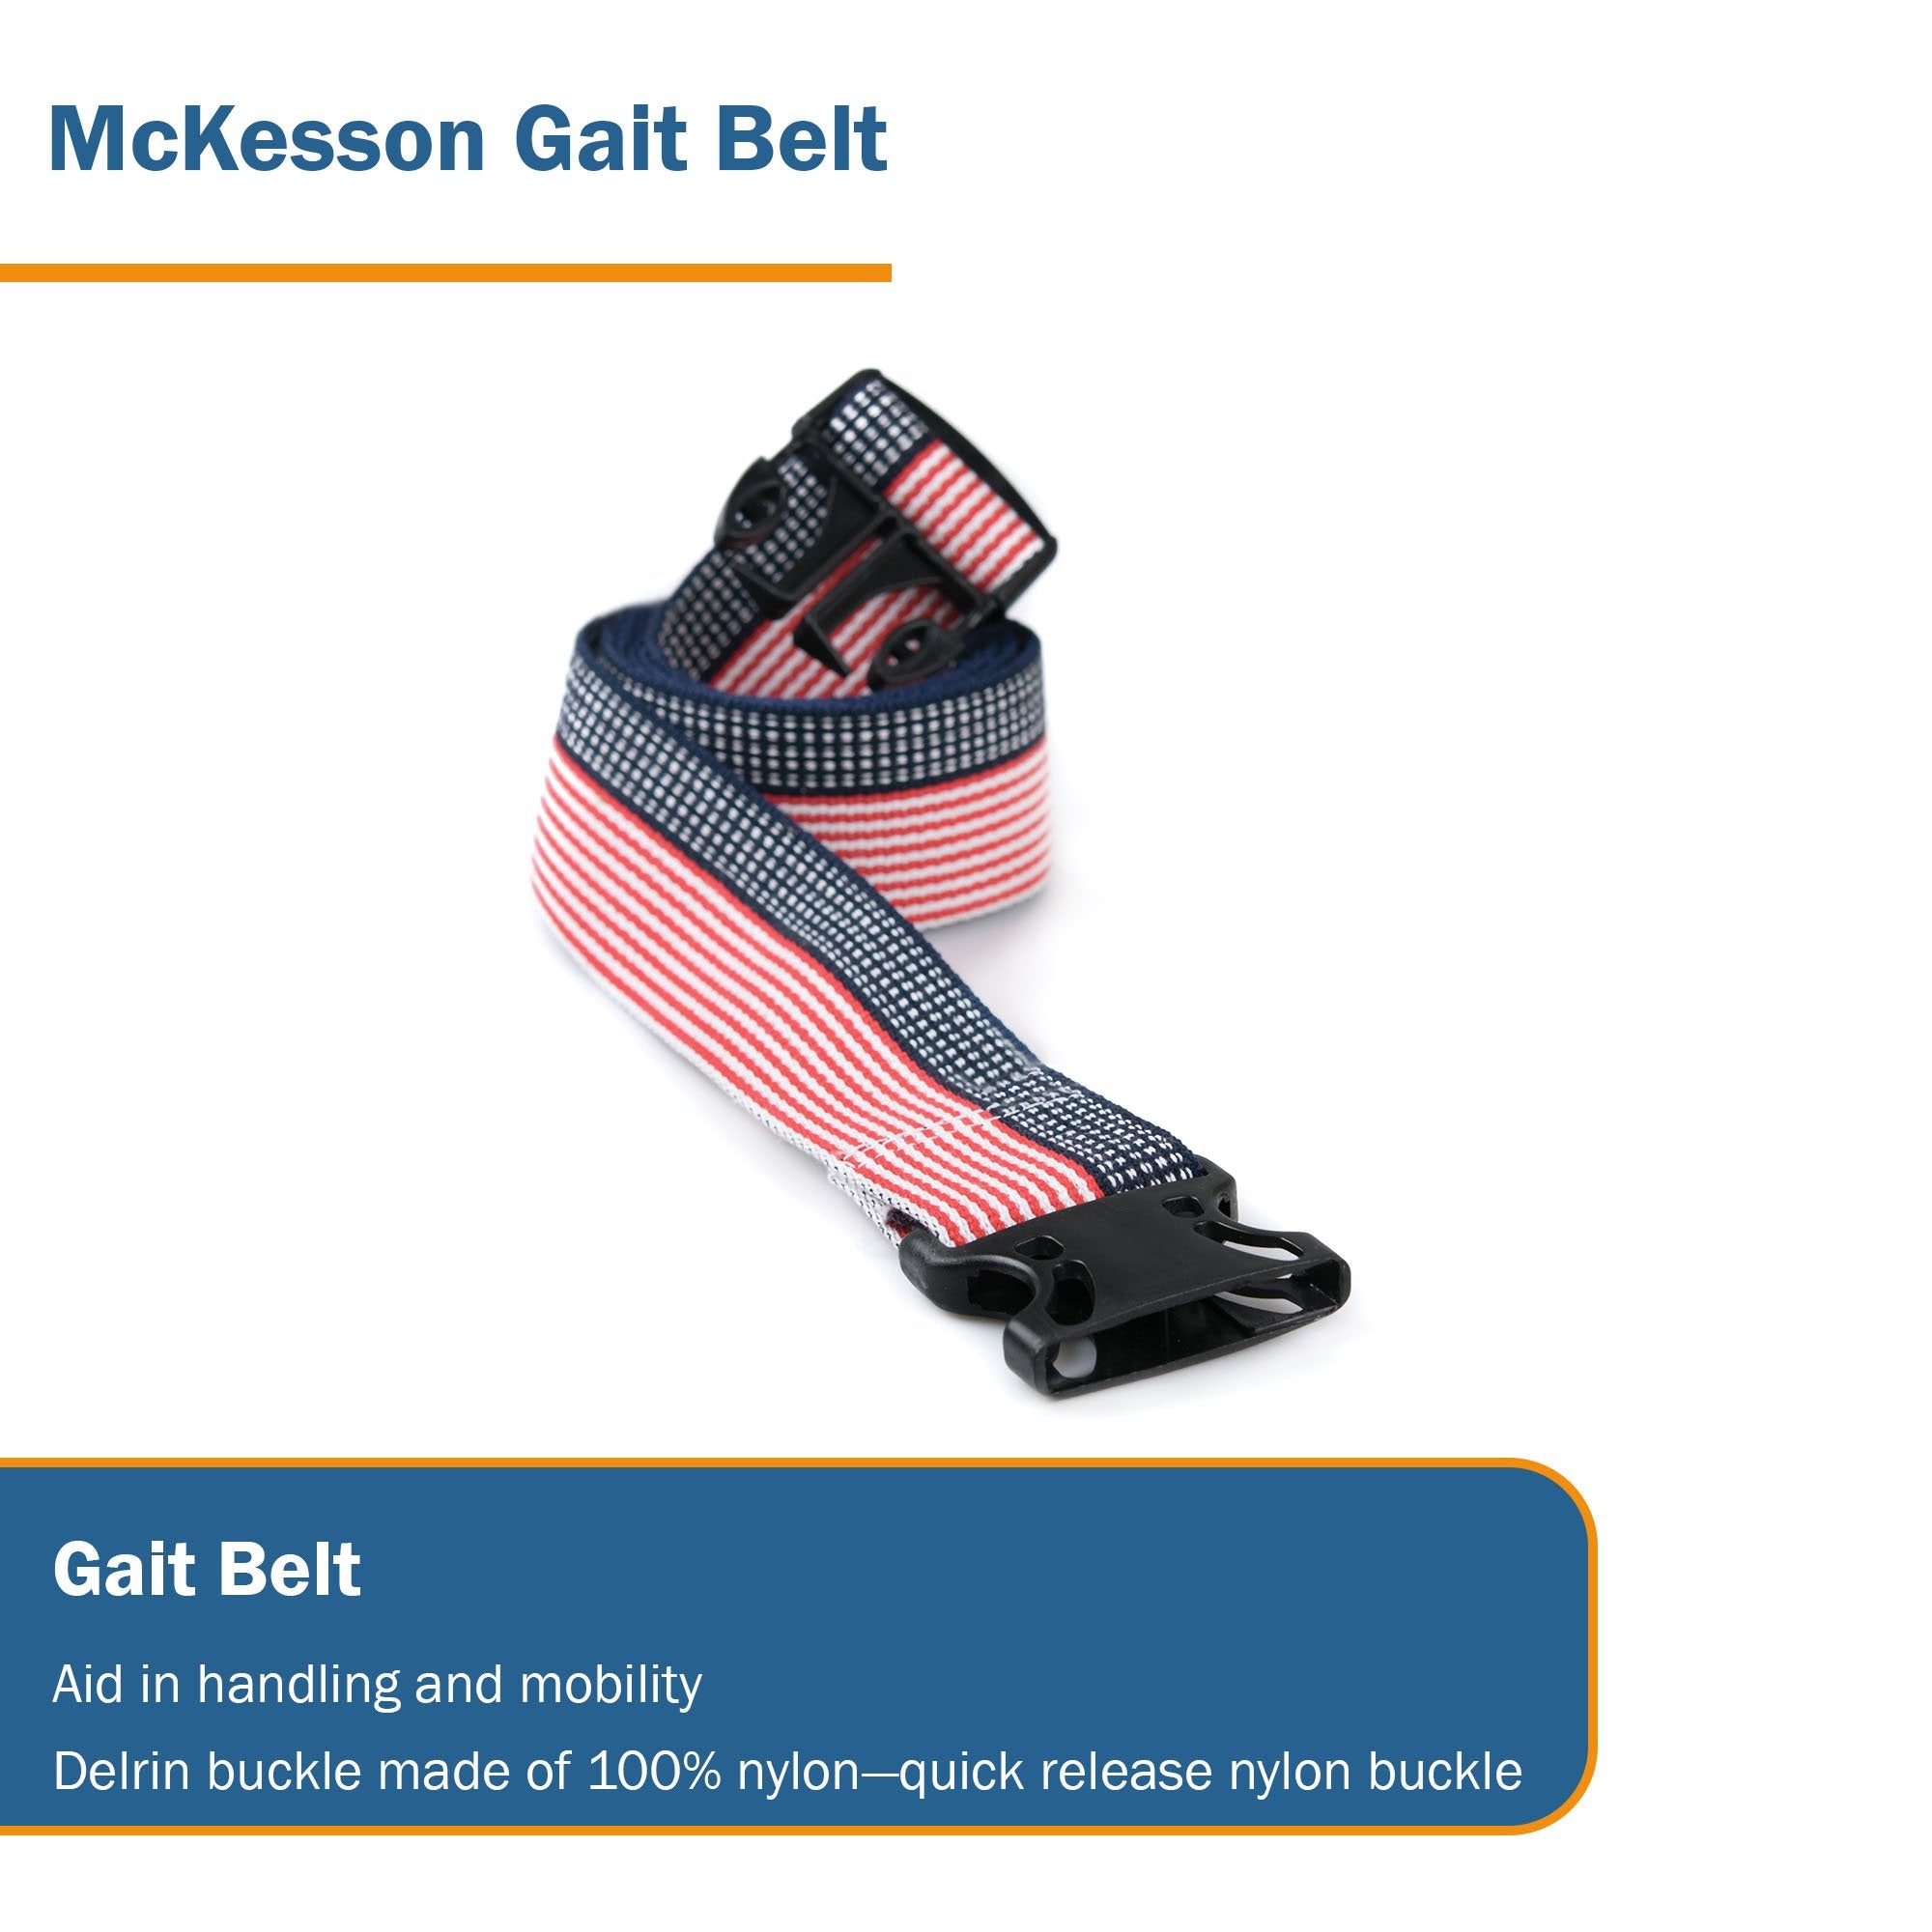 Gait Belt McKesson 60 Inch Length Stars and Stripes Design